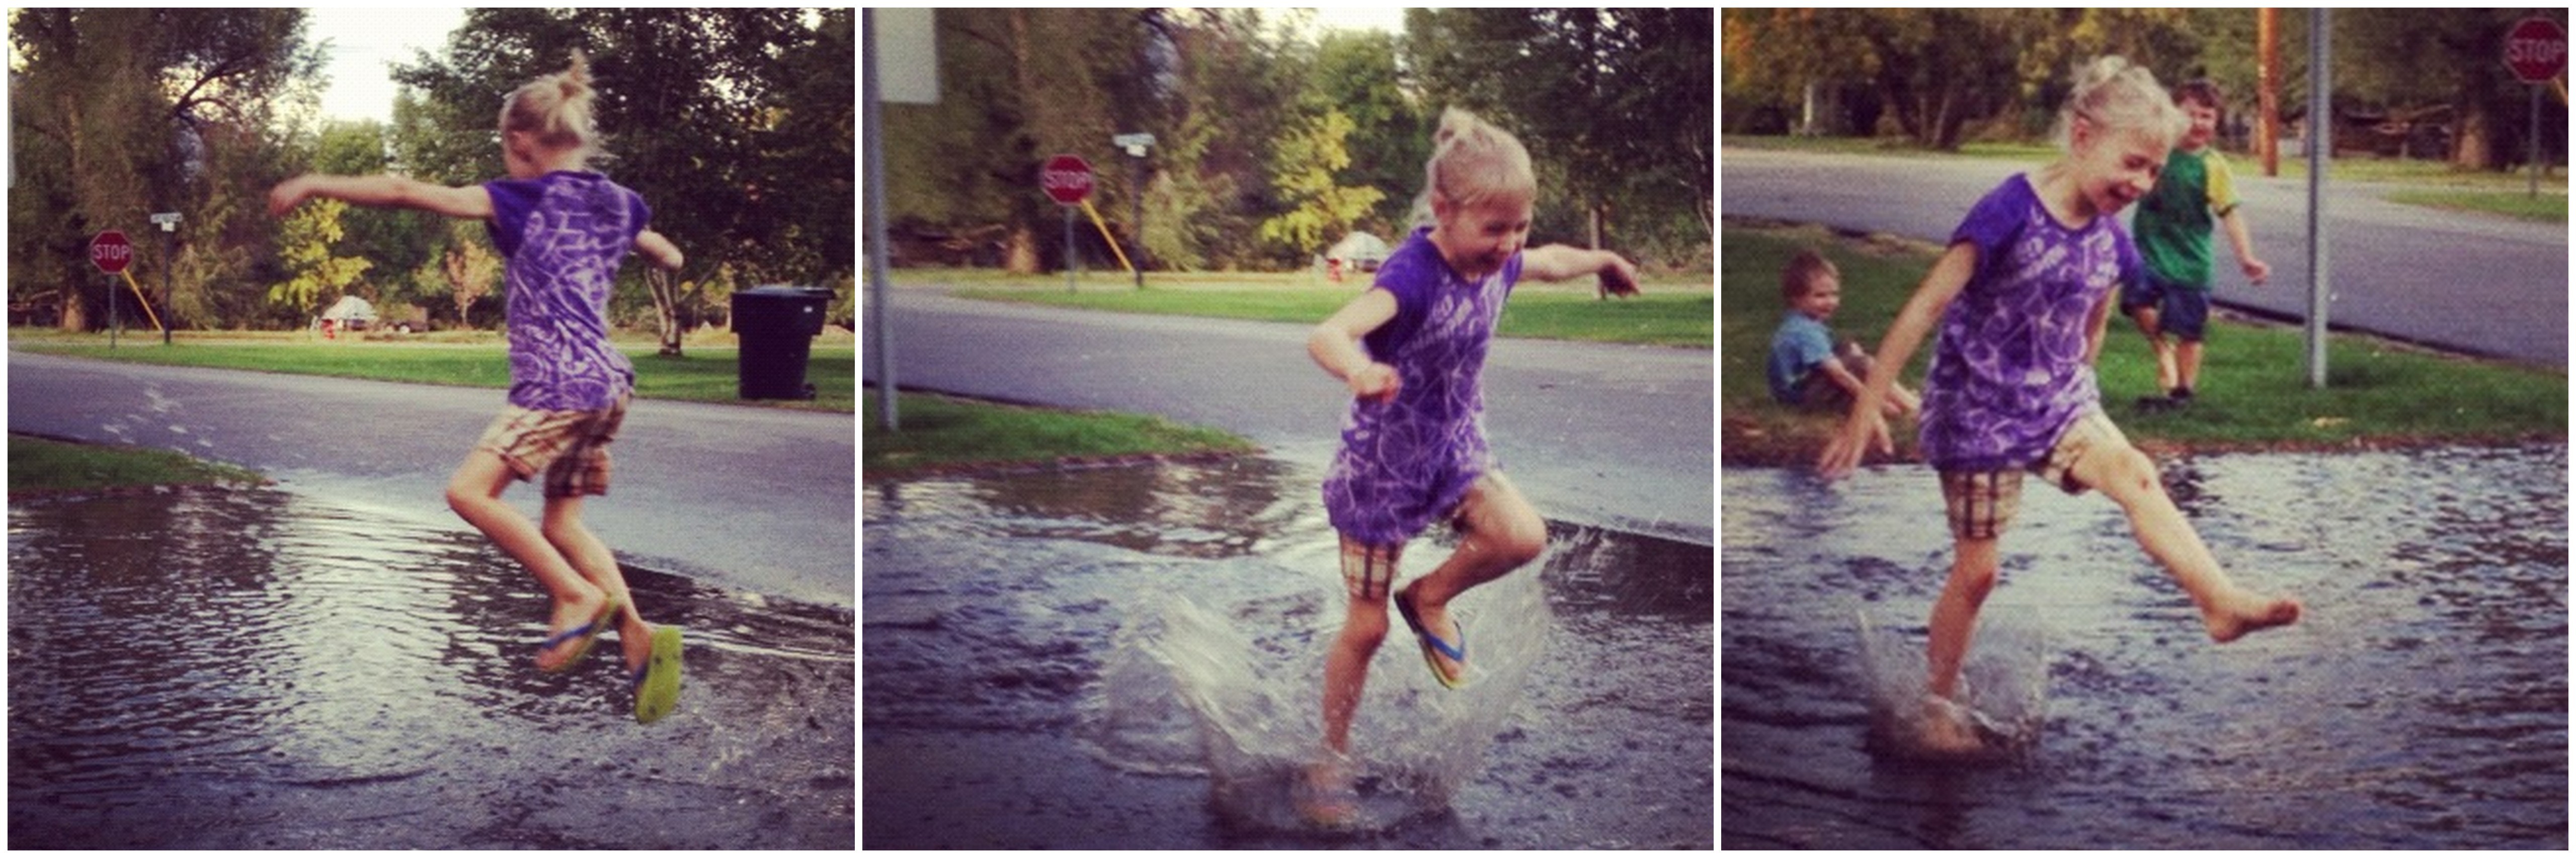 little girl running through puddle instagram